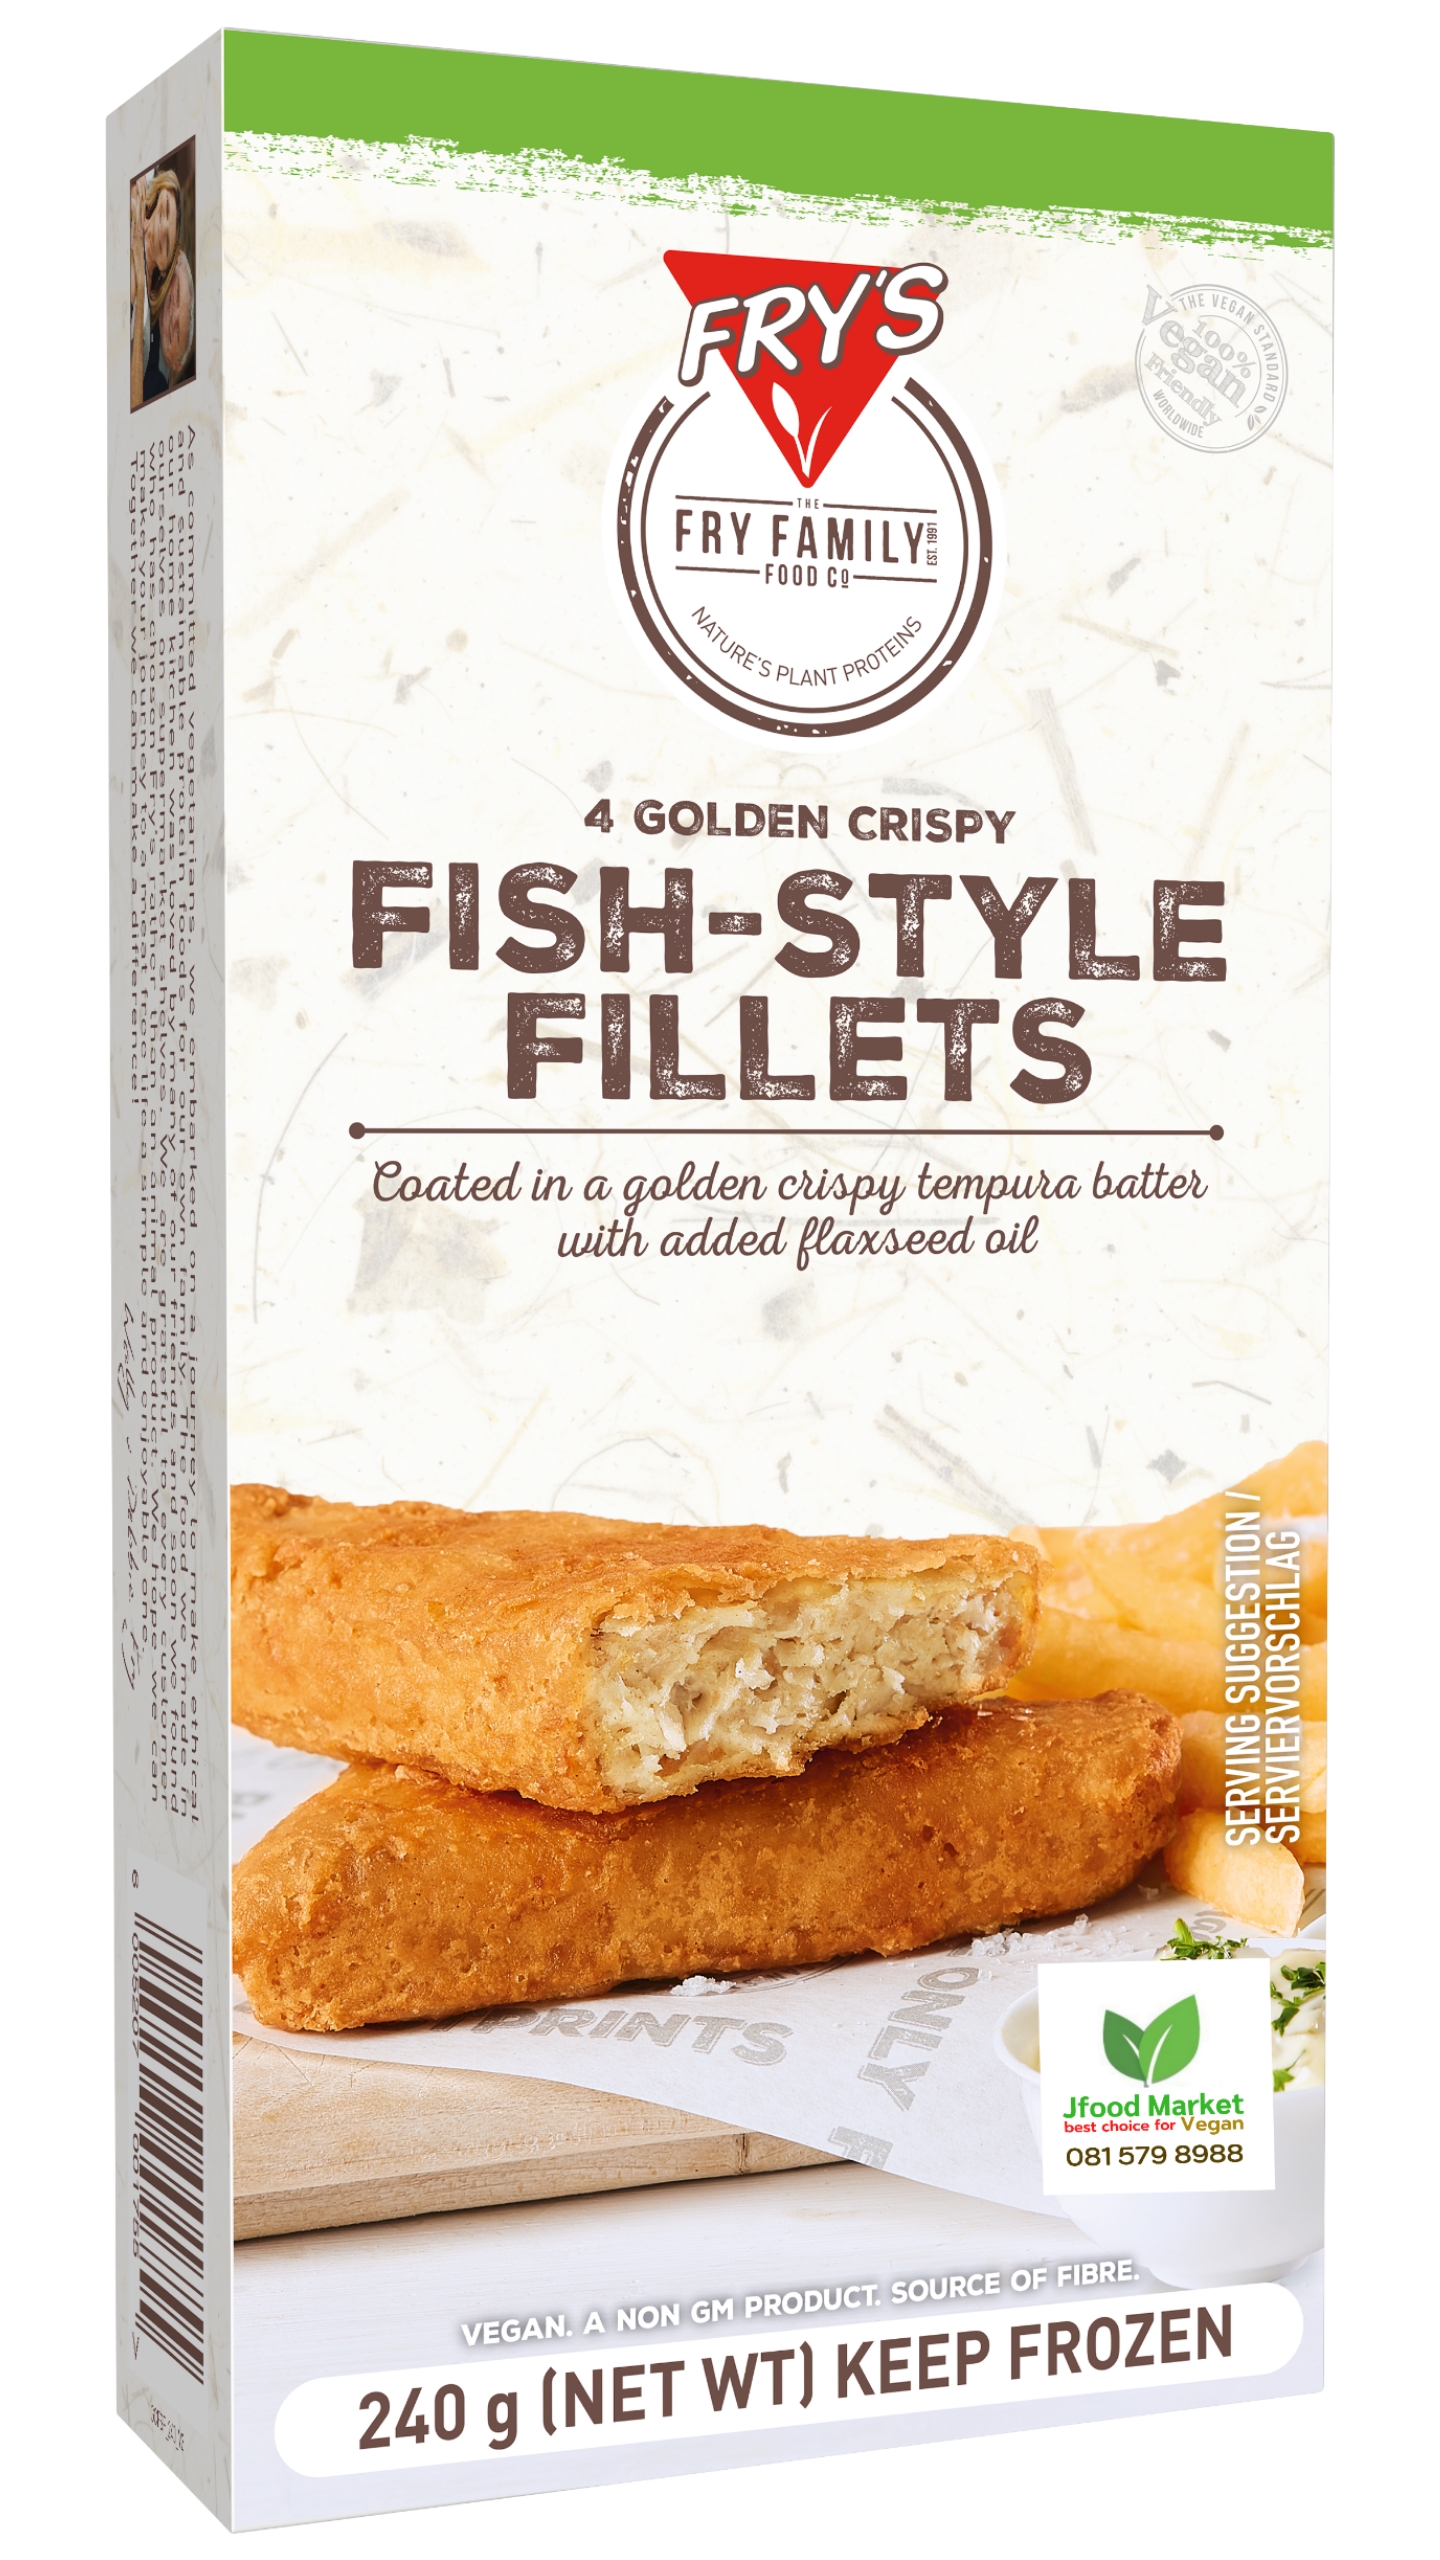 GOLDEN CRISPY FISH-STYLE FILLETS